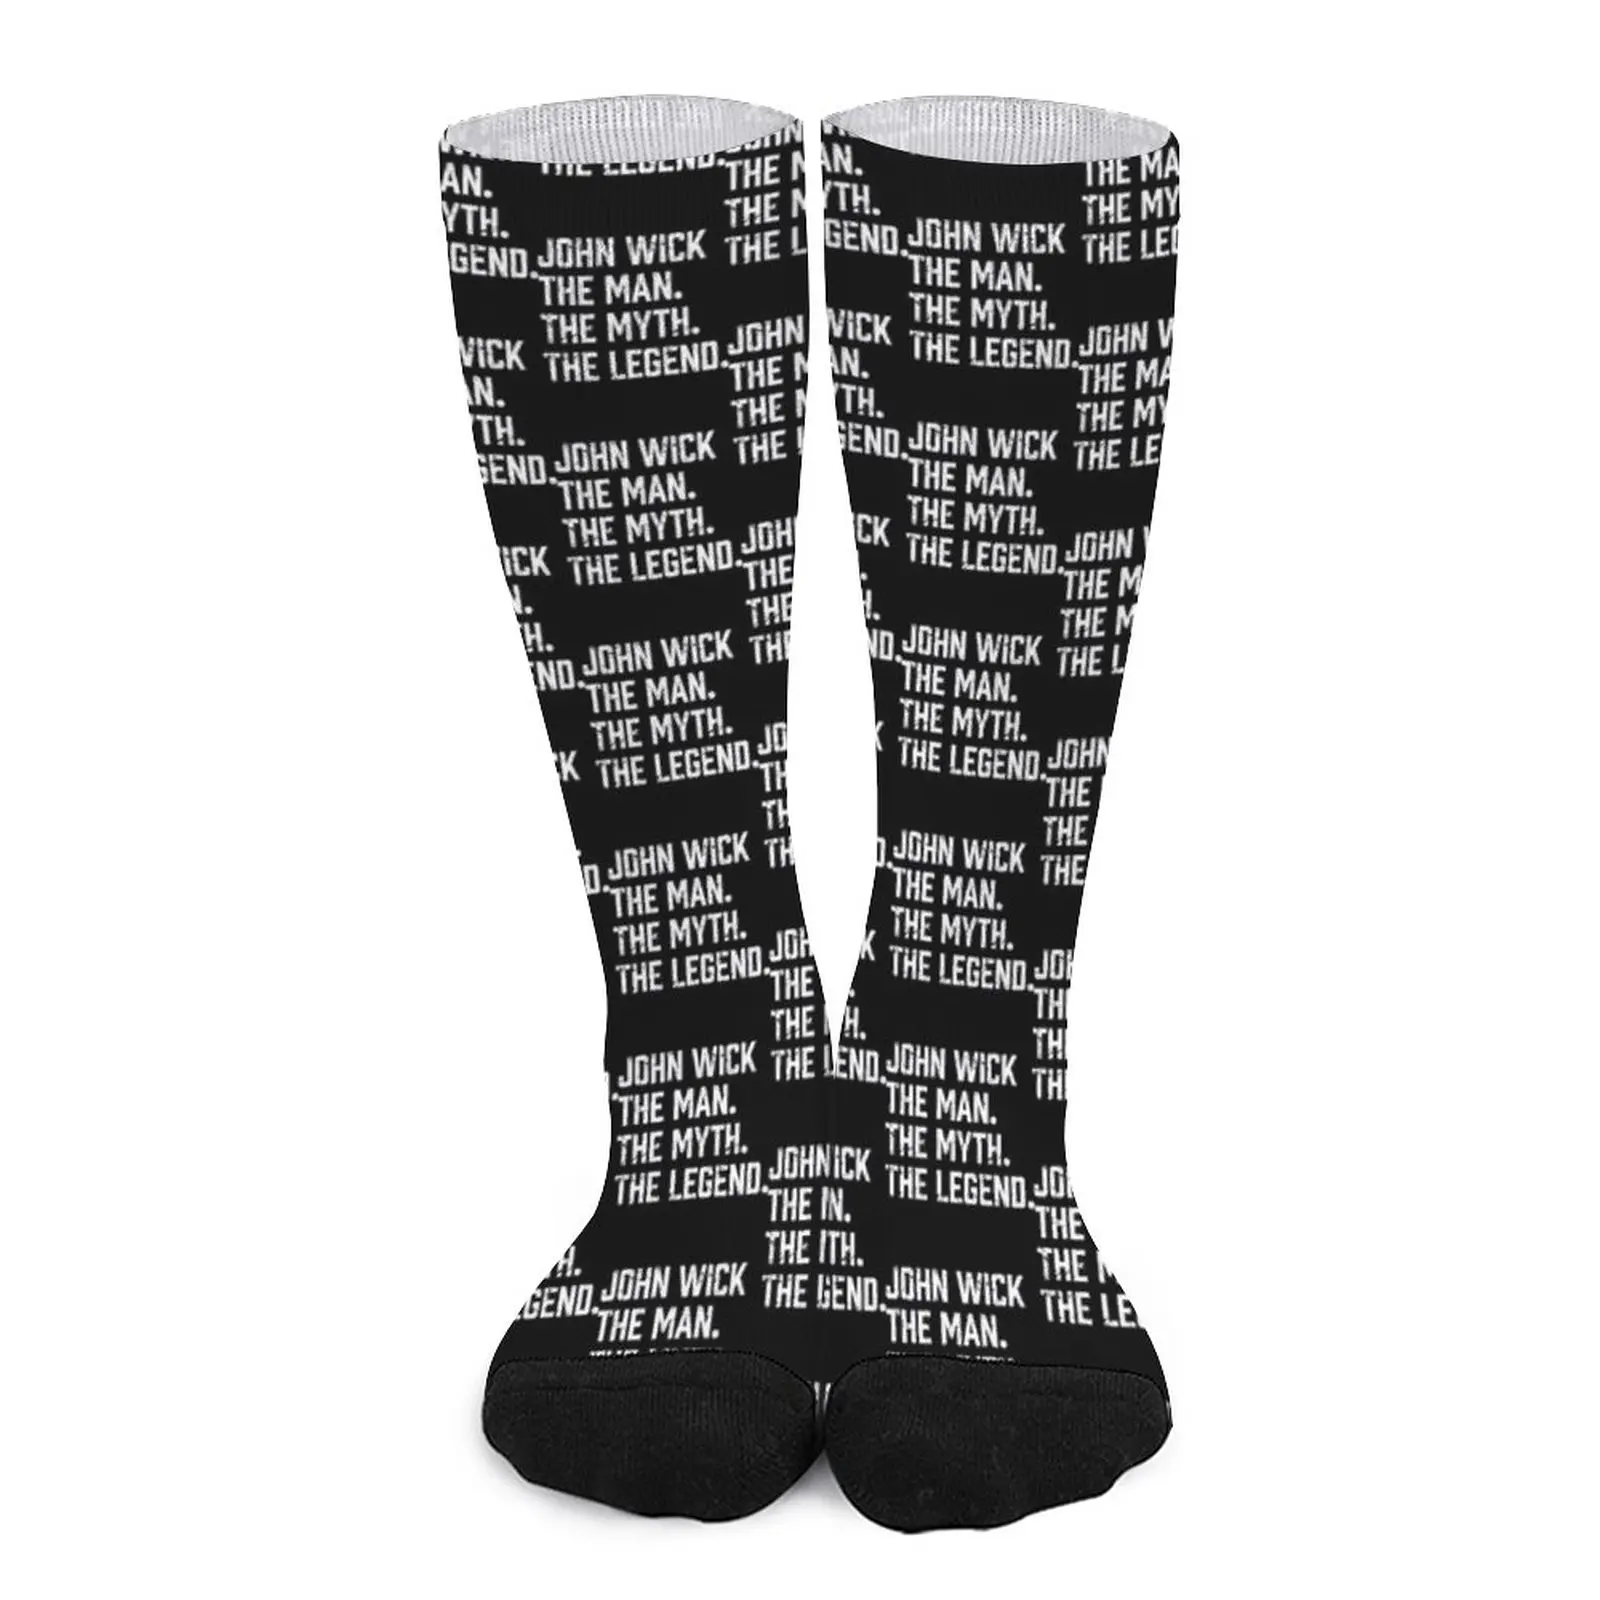 The Man The. Myth. The Legend John Wick Socks moving stockings Funny socks legend john evolver 2 cd